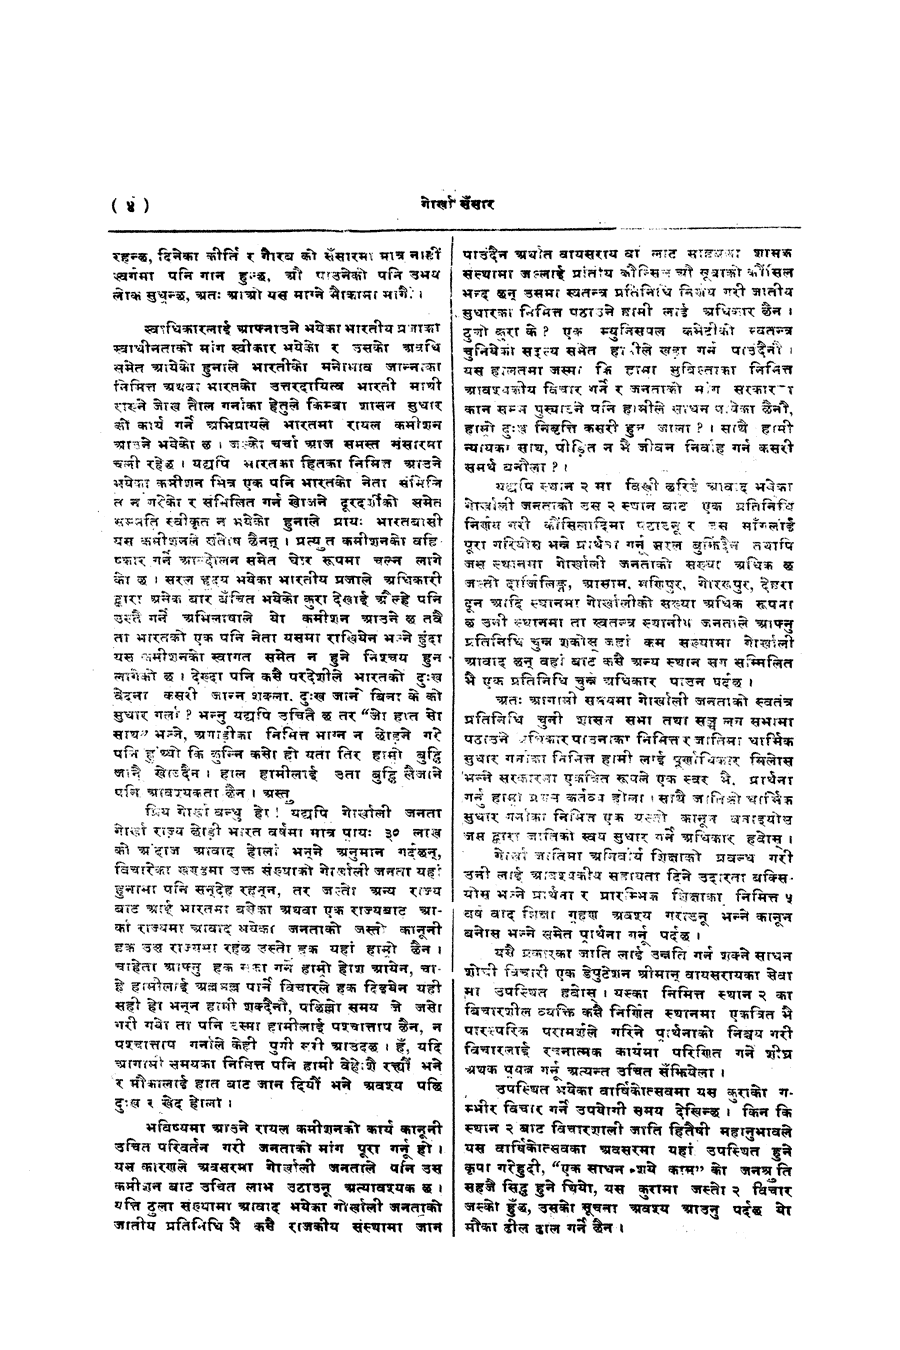 Gorkha Sansar, 5 Dec 1927, page 6